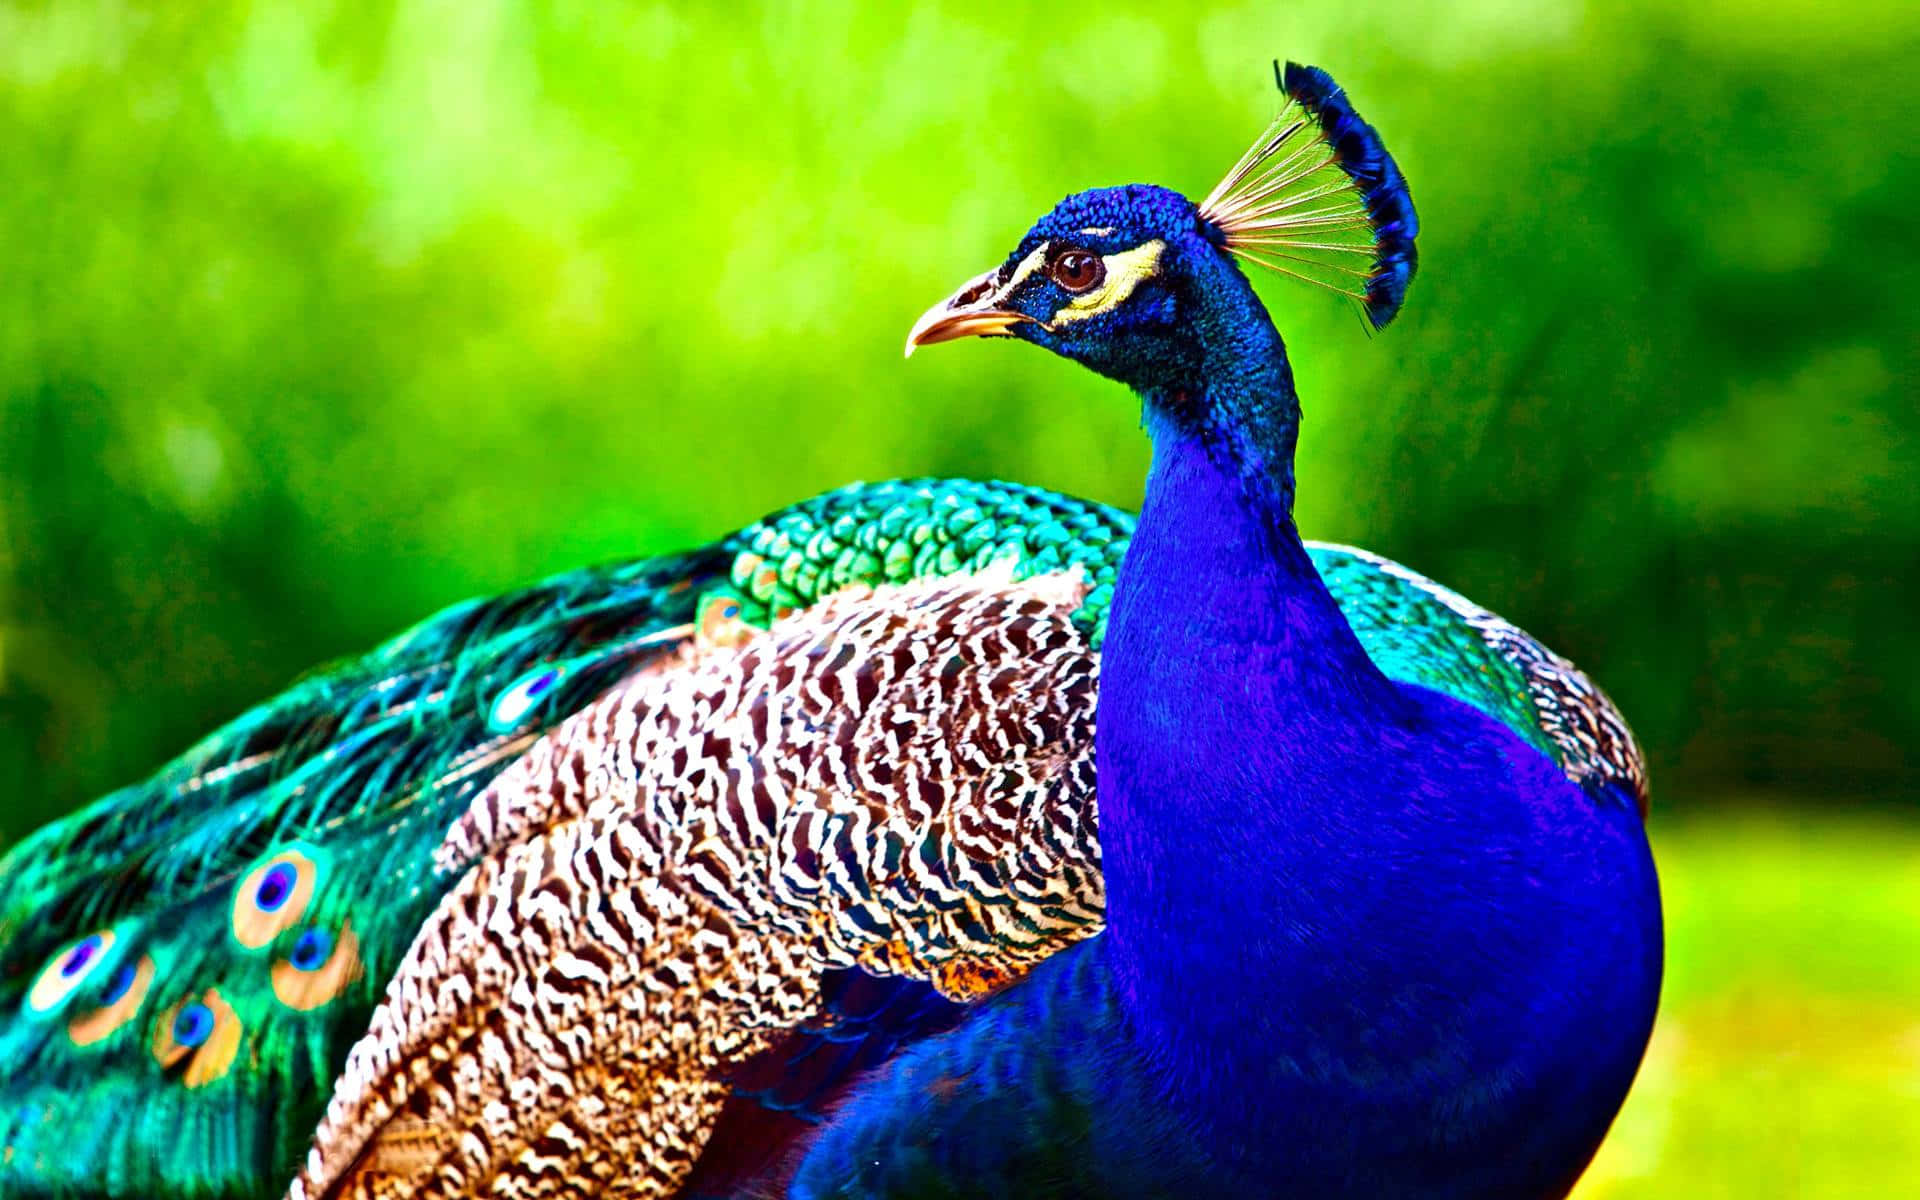 "The Beauty of a Peacock Bird"